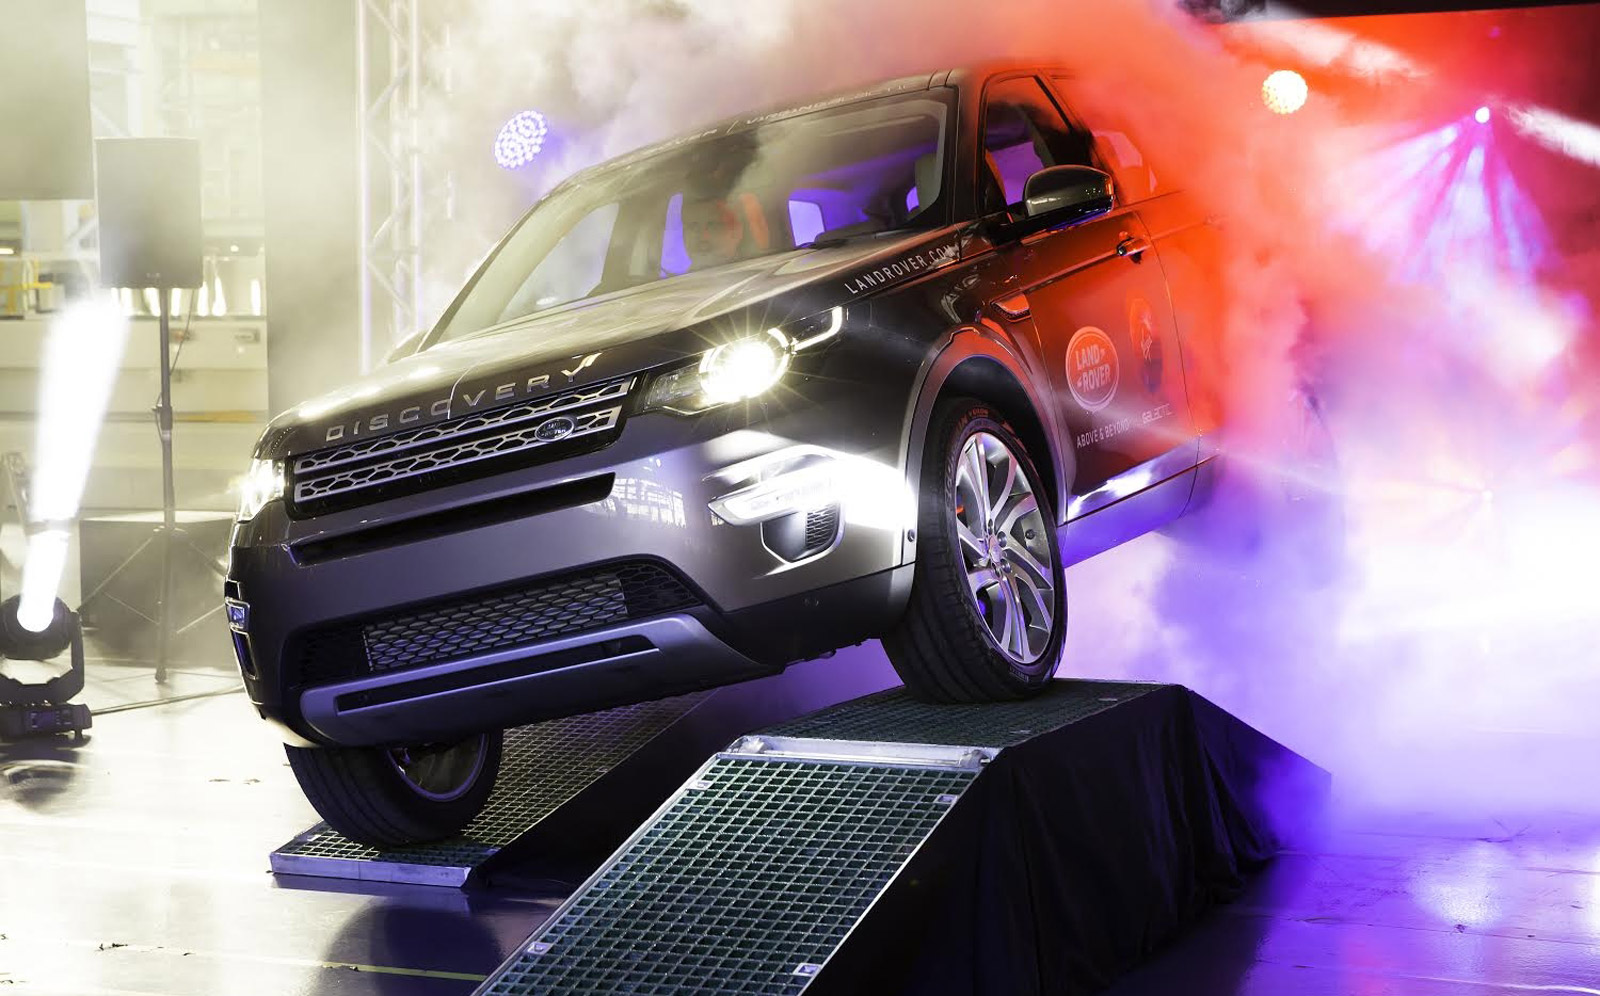 First discovery. Завод Land Rover в Халевуде. ЛР диско спорт 2023 фото. Jaguar Land Rover Halewood. F1 Discovery.